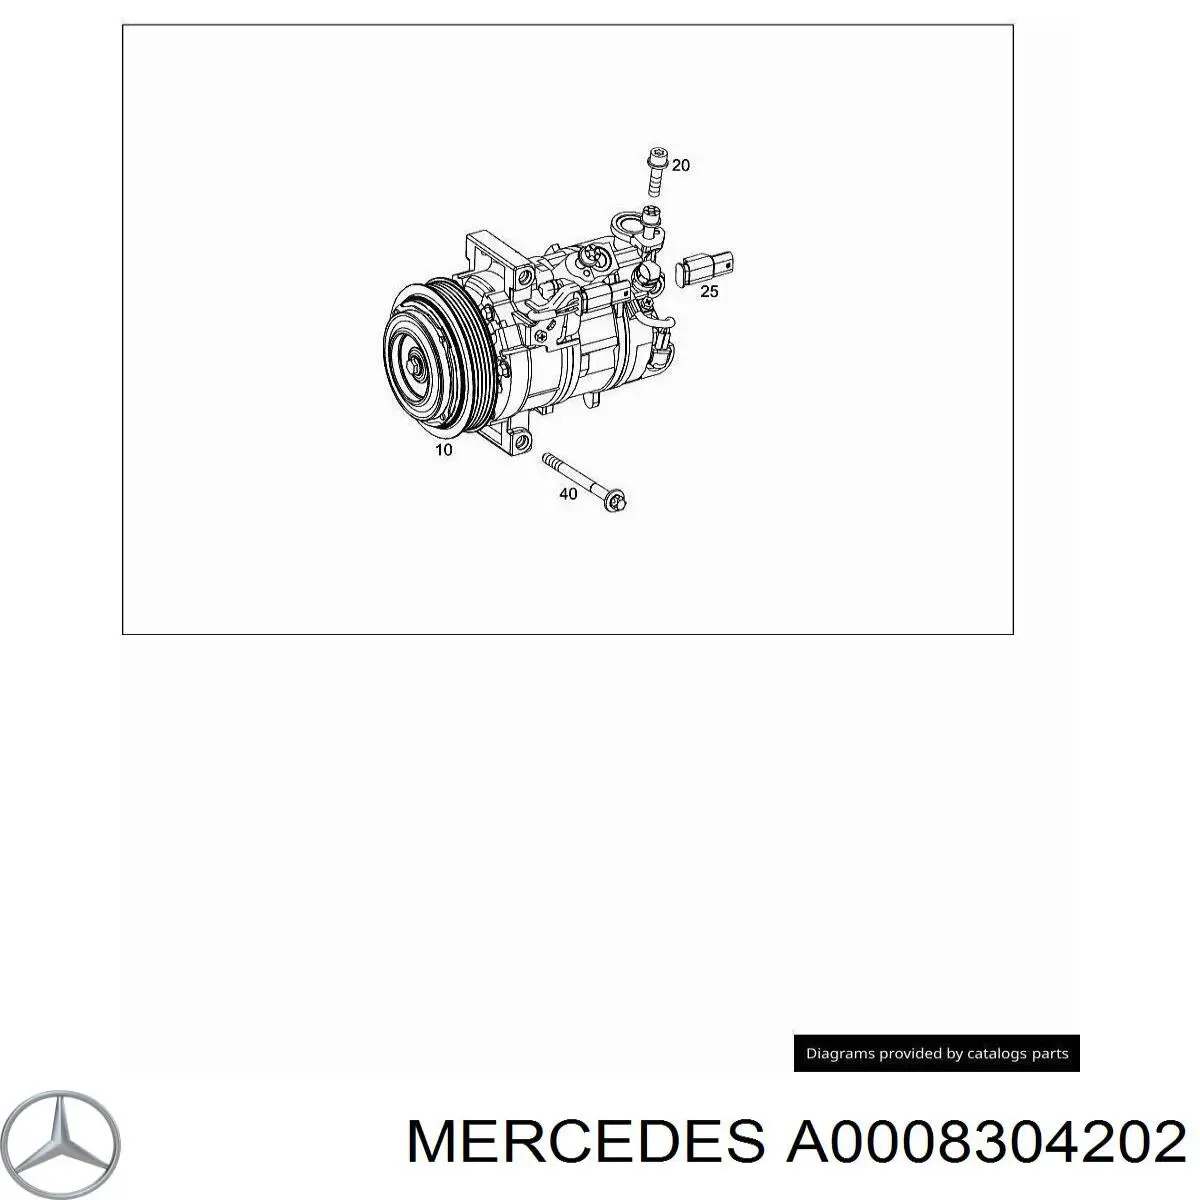 Compresor climatizador para Mercedes A (W177)